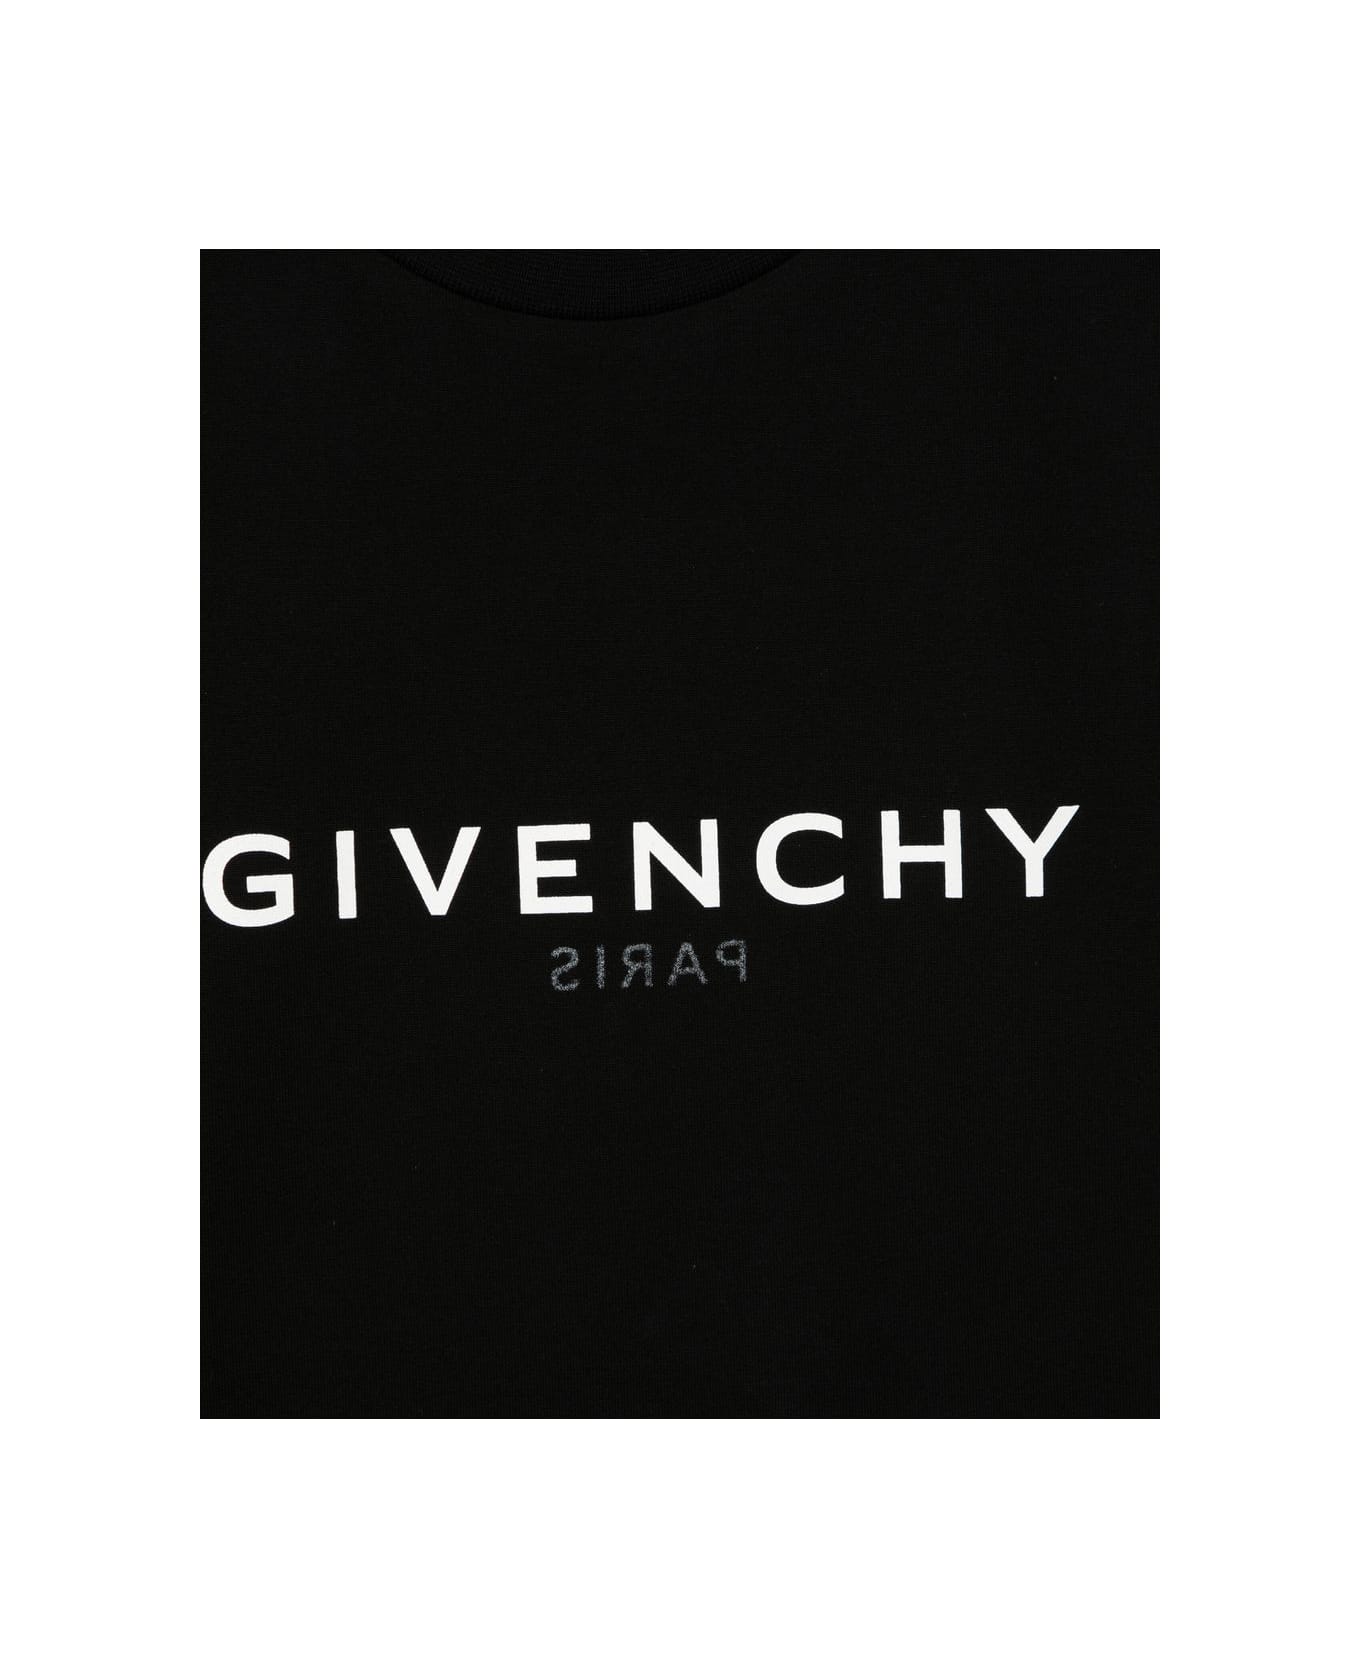 Givenchy Black Cotton Tshirt - Nero